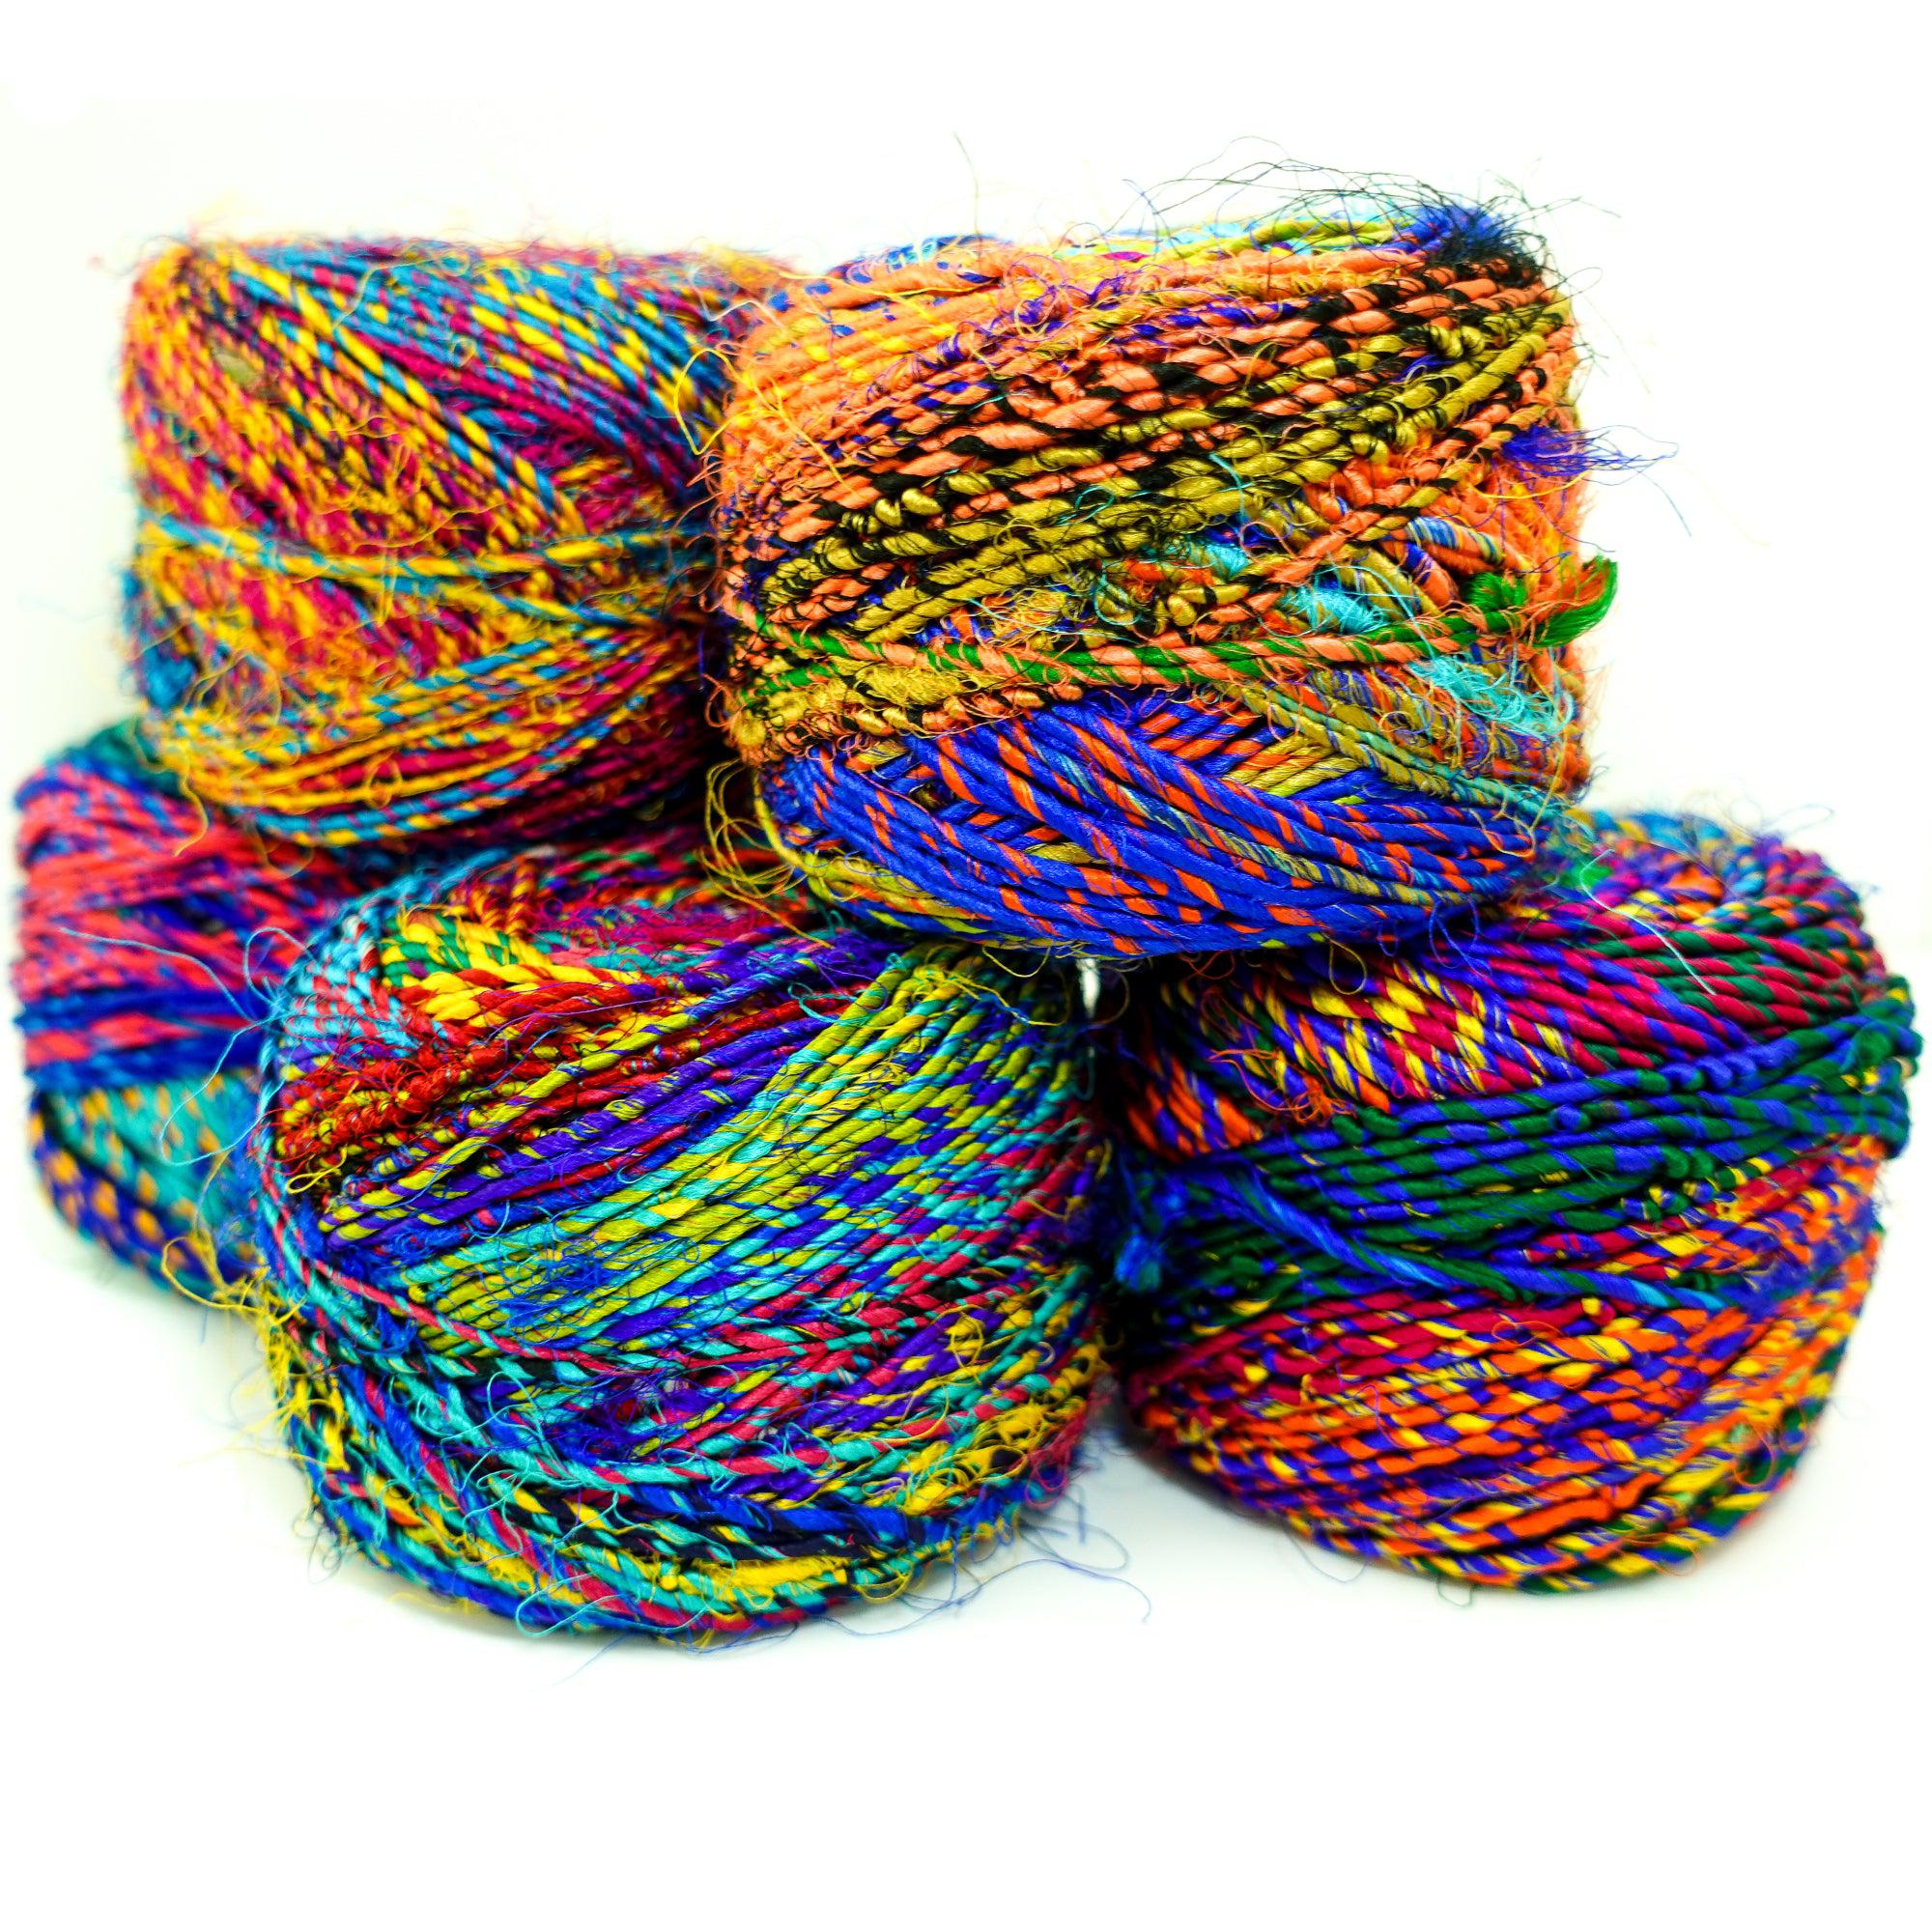 Revolution Fibers Multi-Color Recycled Sari Silk Yarn, Handspun Sari Fabric Scrap Yarn Cakes | 100 Grams per Ball-Yarn-Revolution Fibers-2-Pack-Revolution Fibers